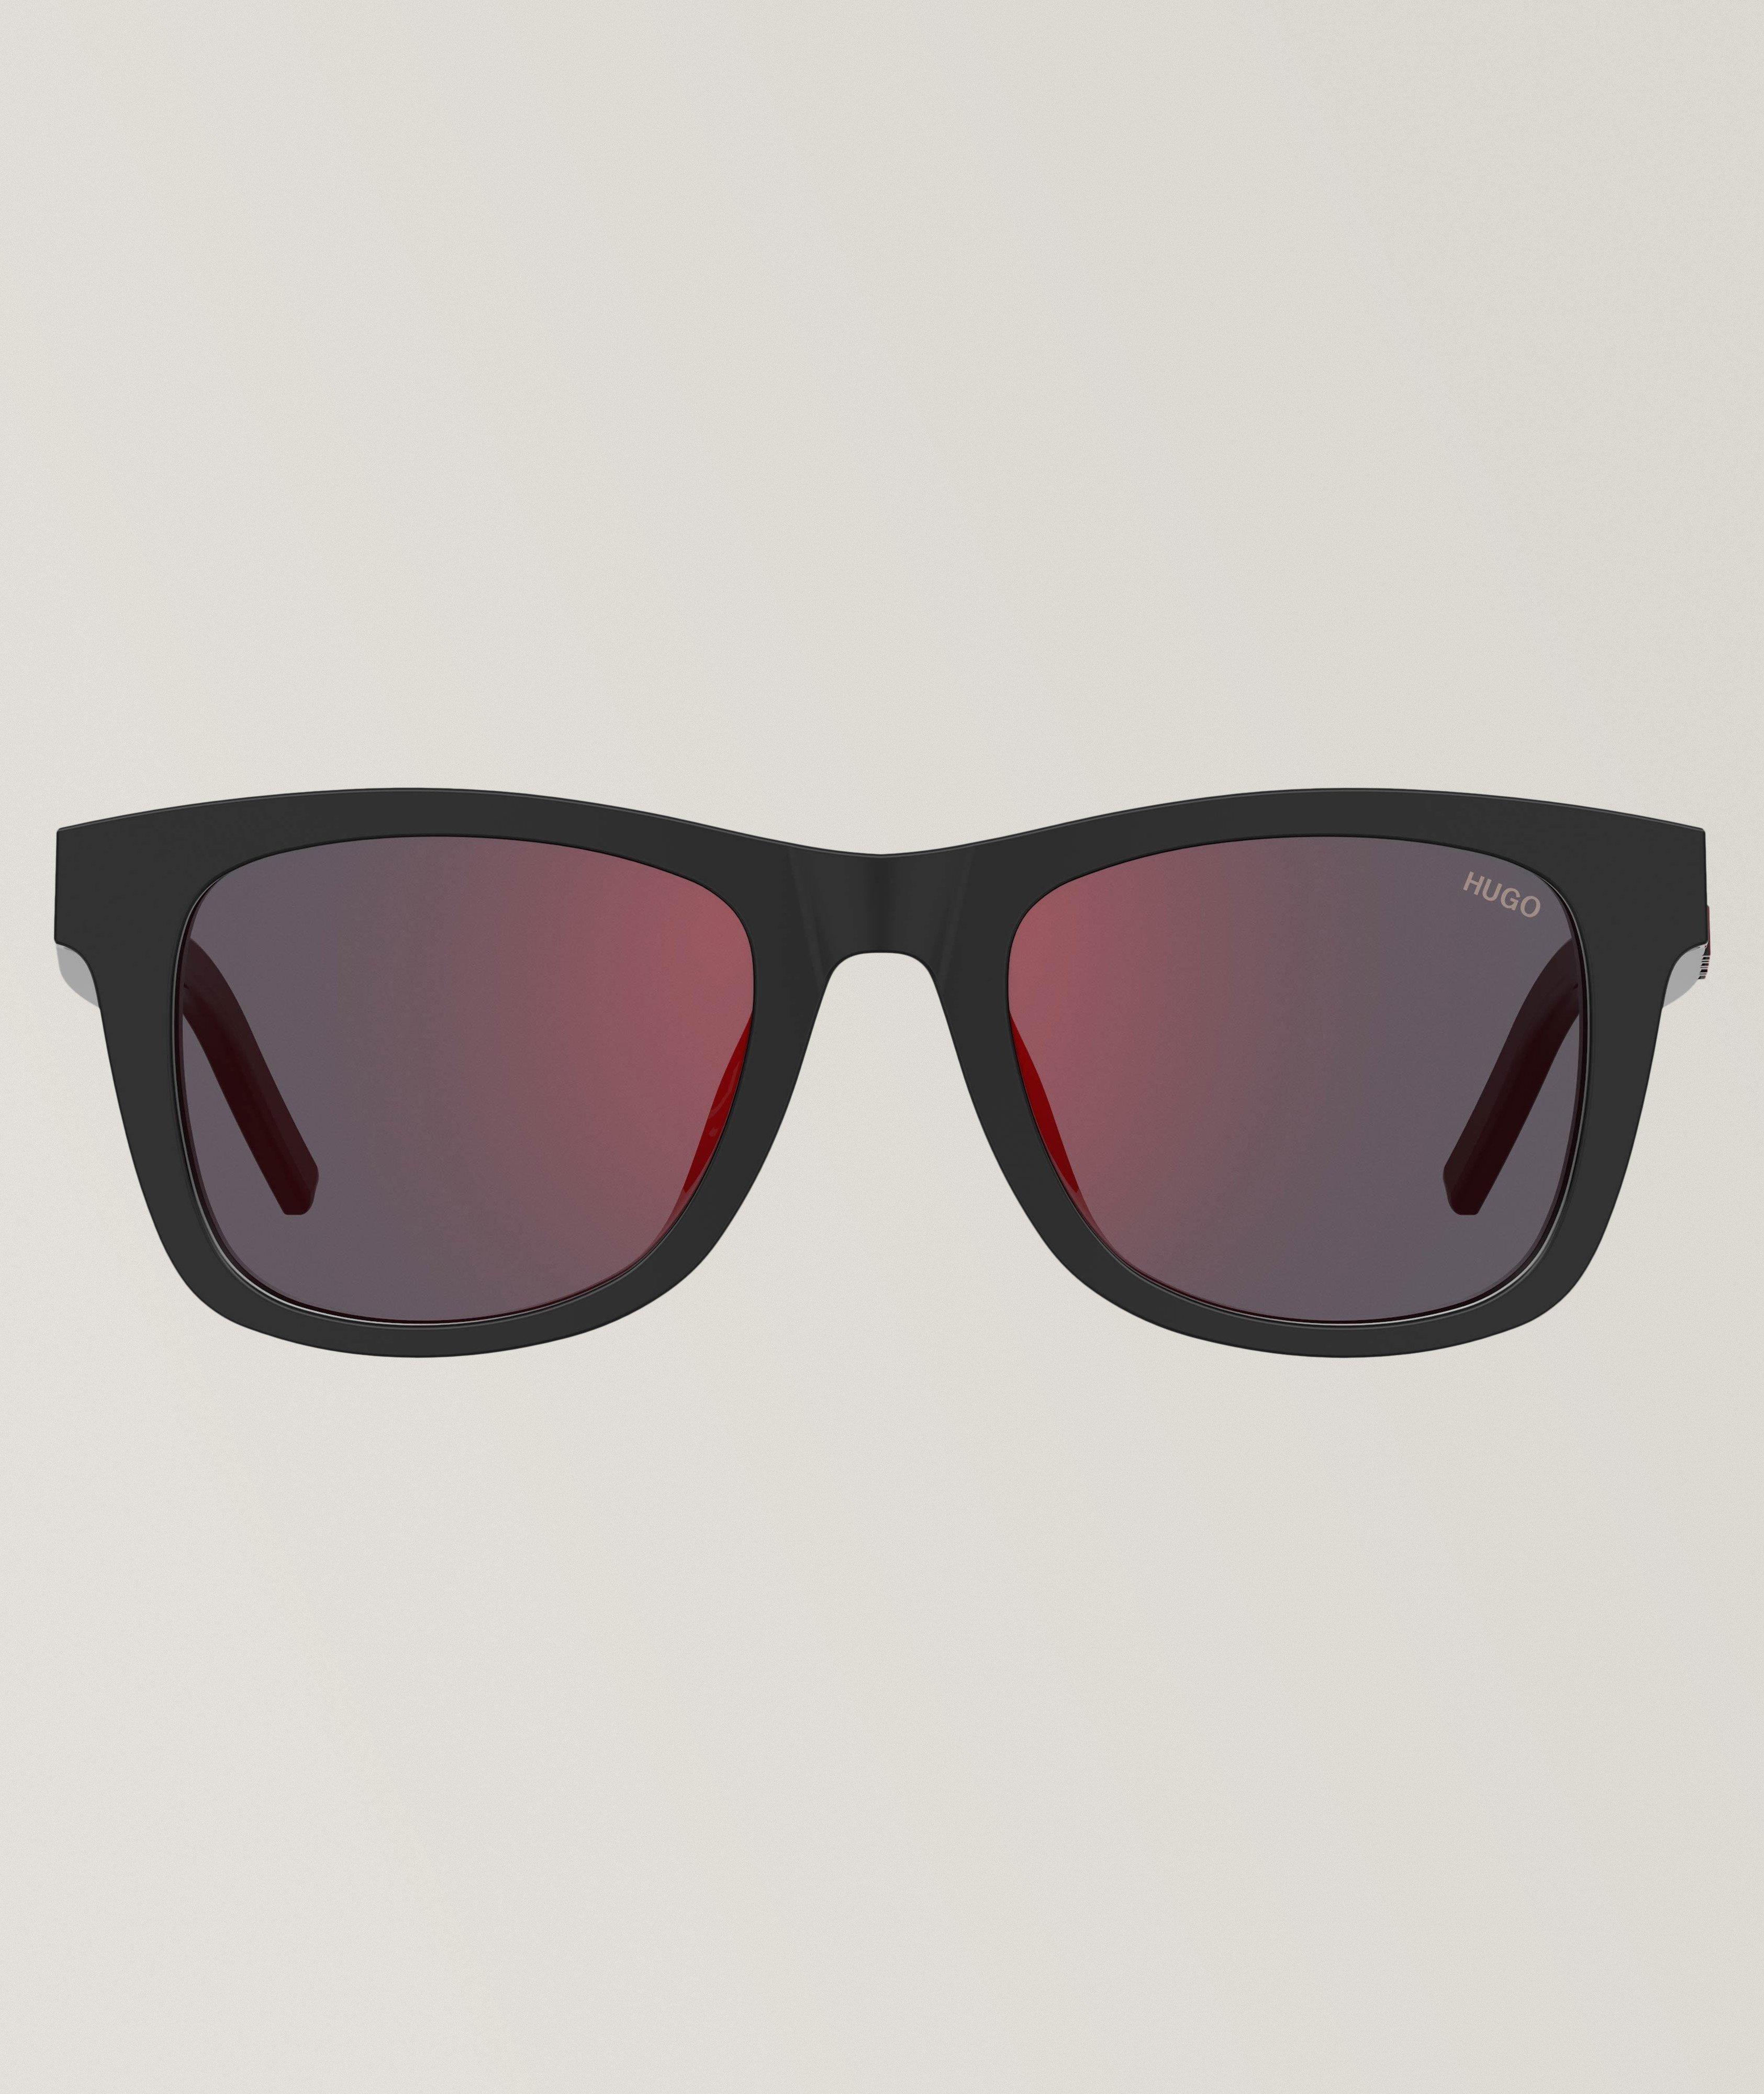 Hugo Black Sunglasses With Red Mirror Lenses